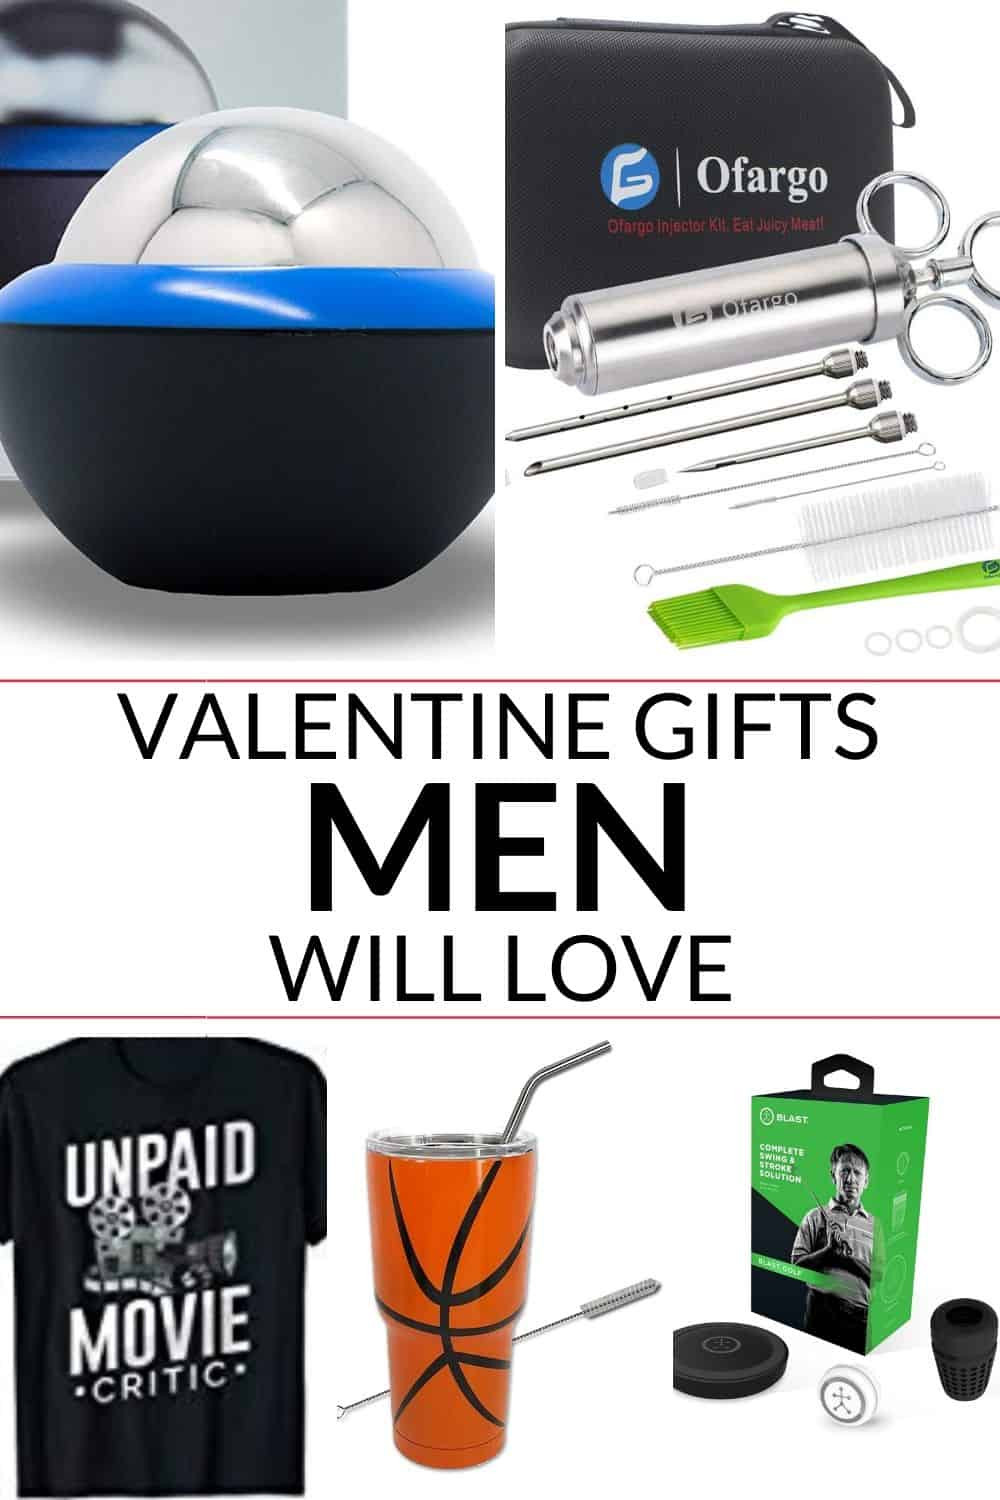 Valentine Gift Husband Ideas
 Valentine Gift for Husband Great ideas